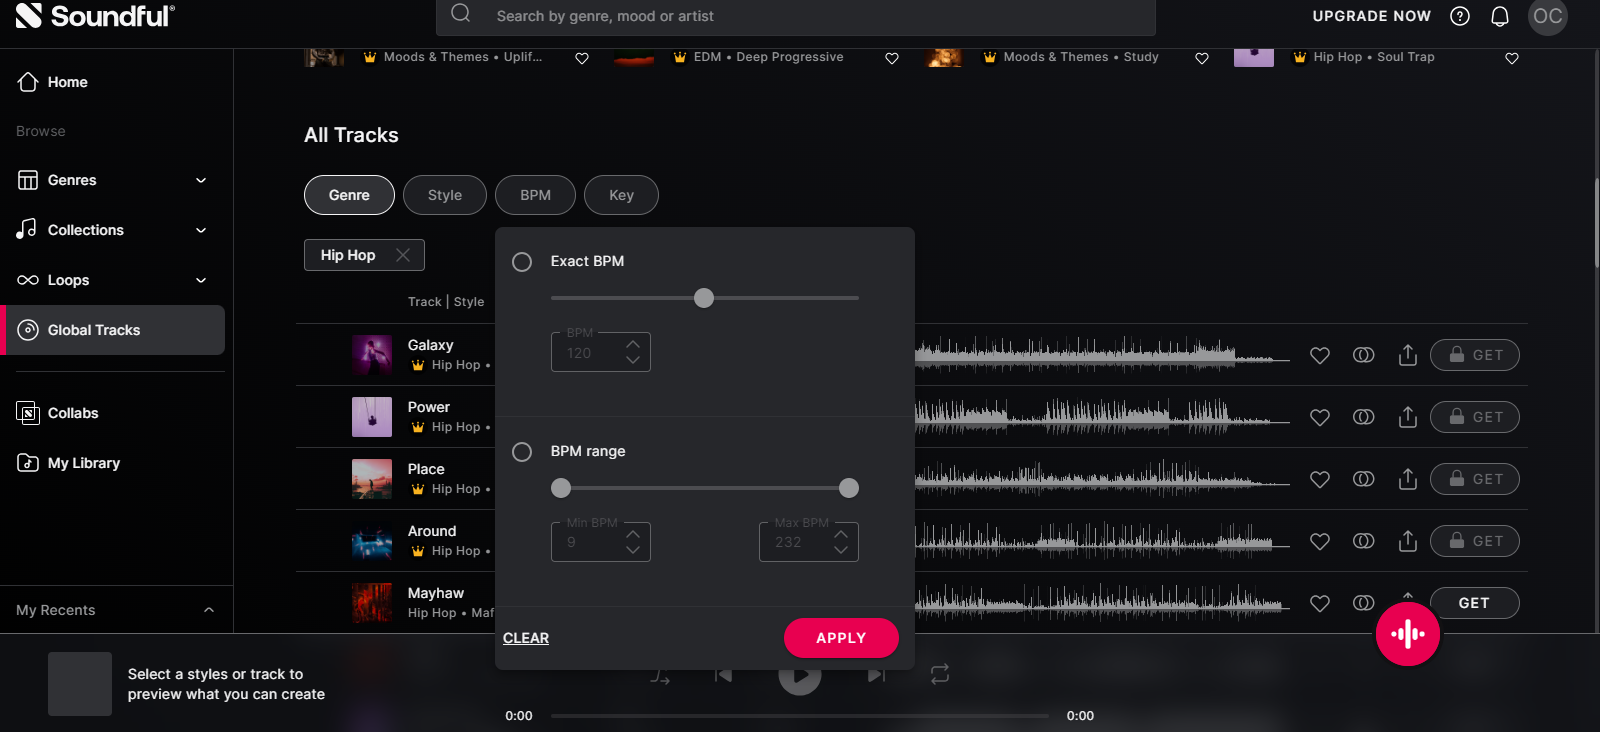 A screenshot of Soundful's editing studio